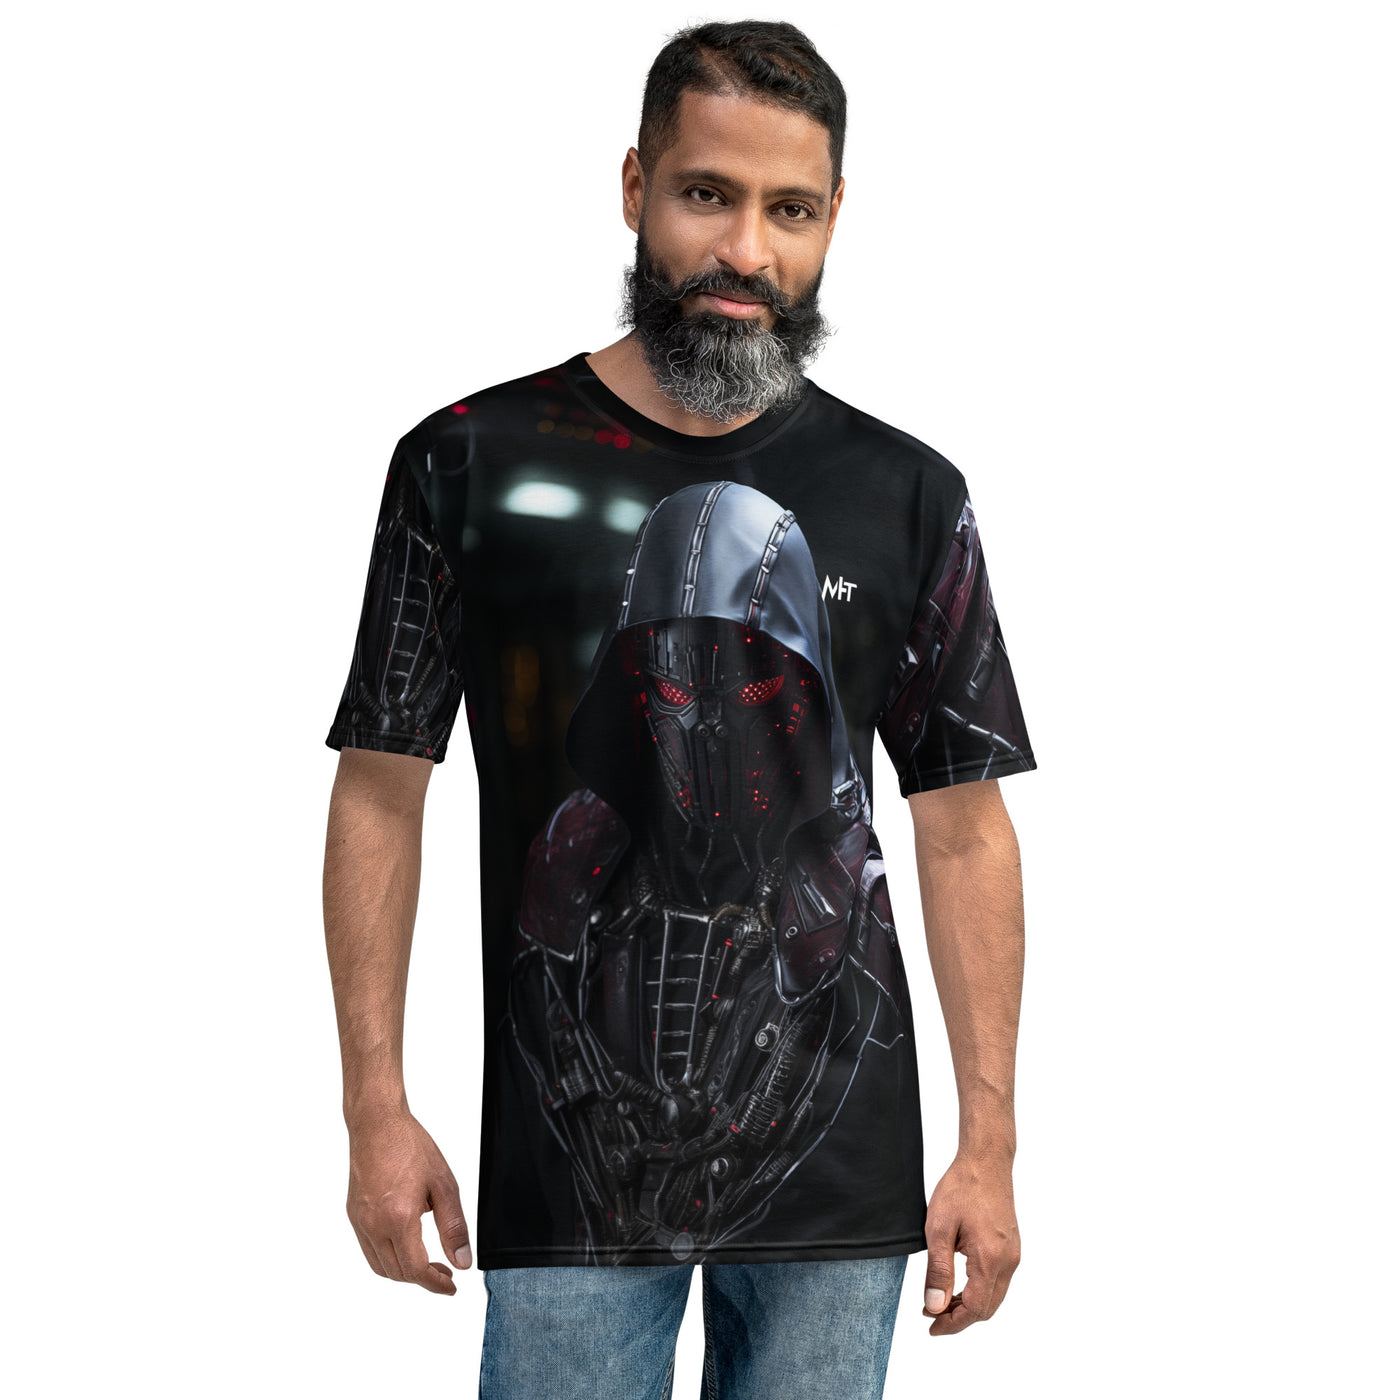 CyberArms Warrior v34 - Men's t-shirt